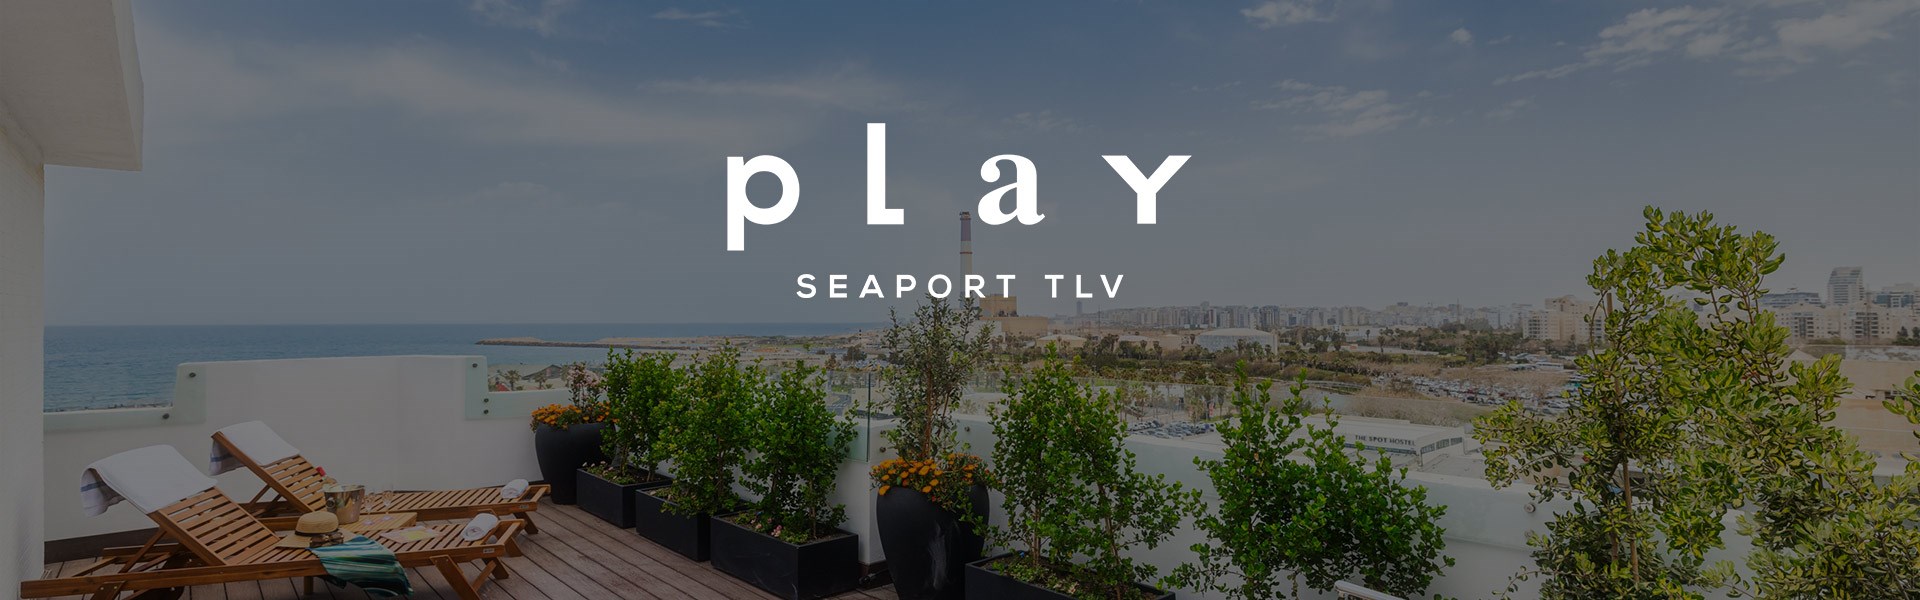 PLAY Seaport TLV - Hotel Tel Aviv (formerly Port a